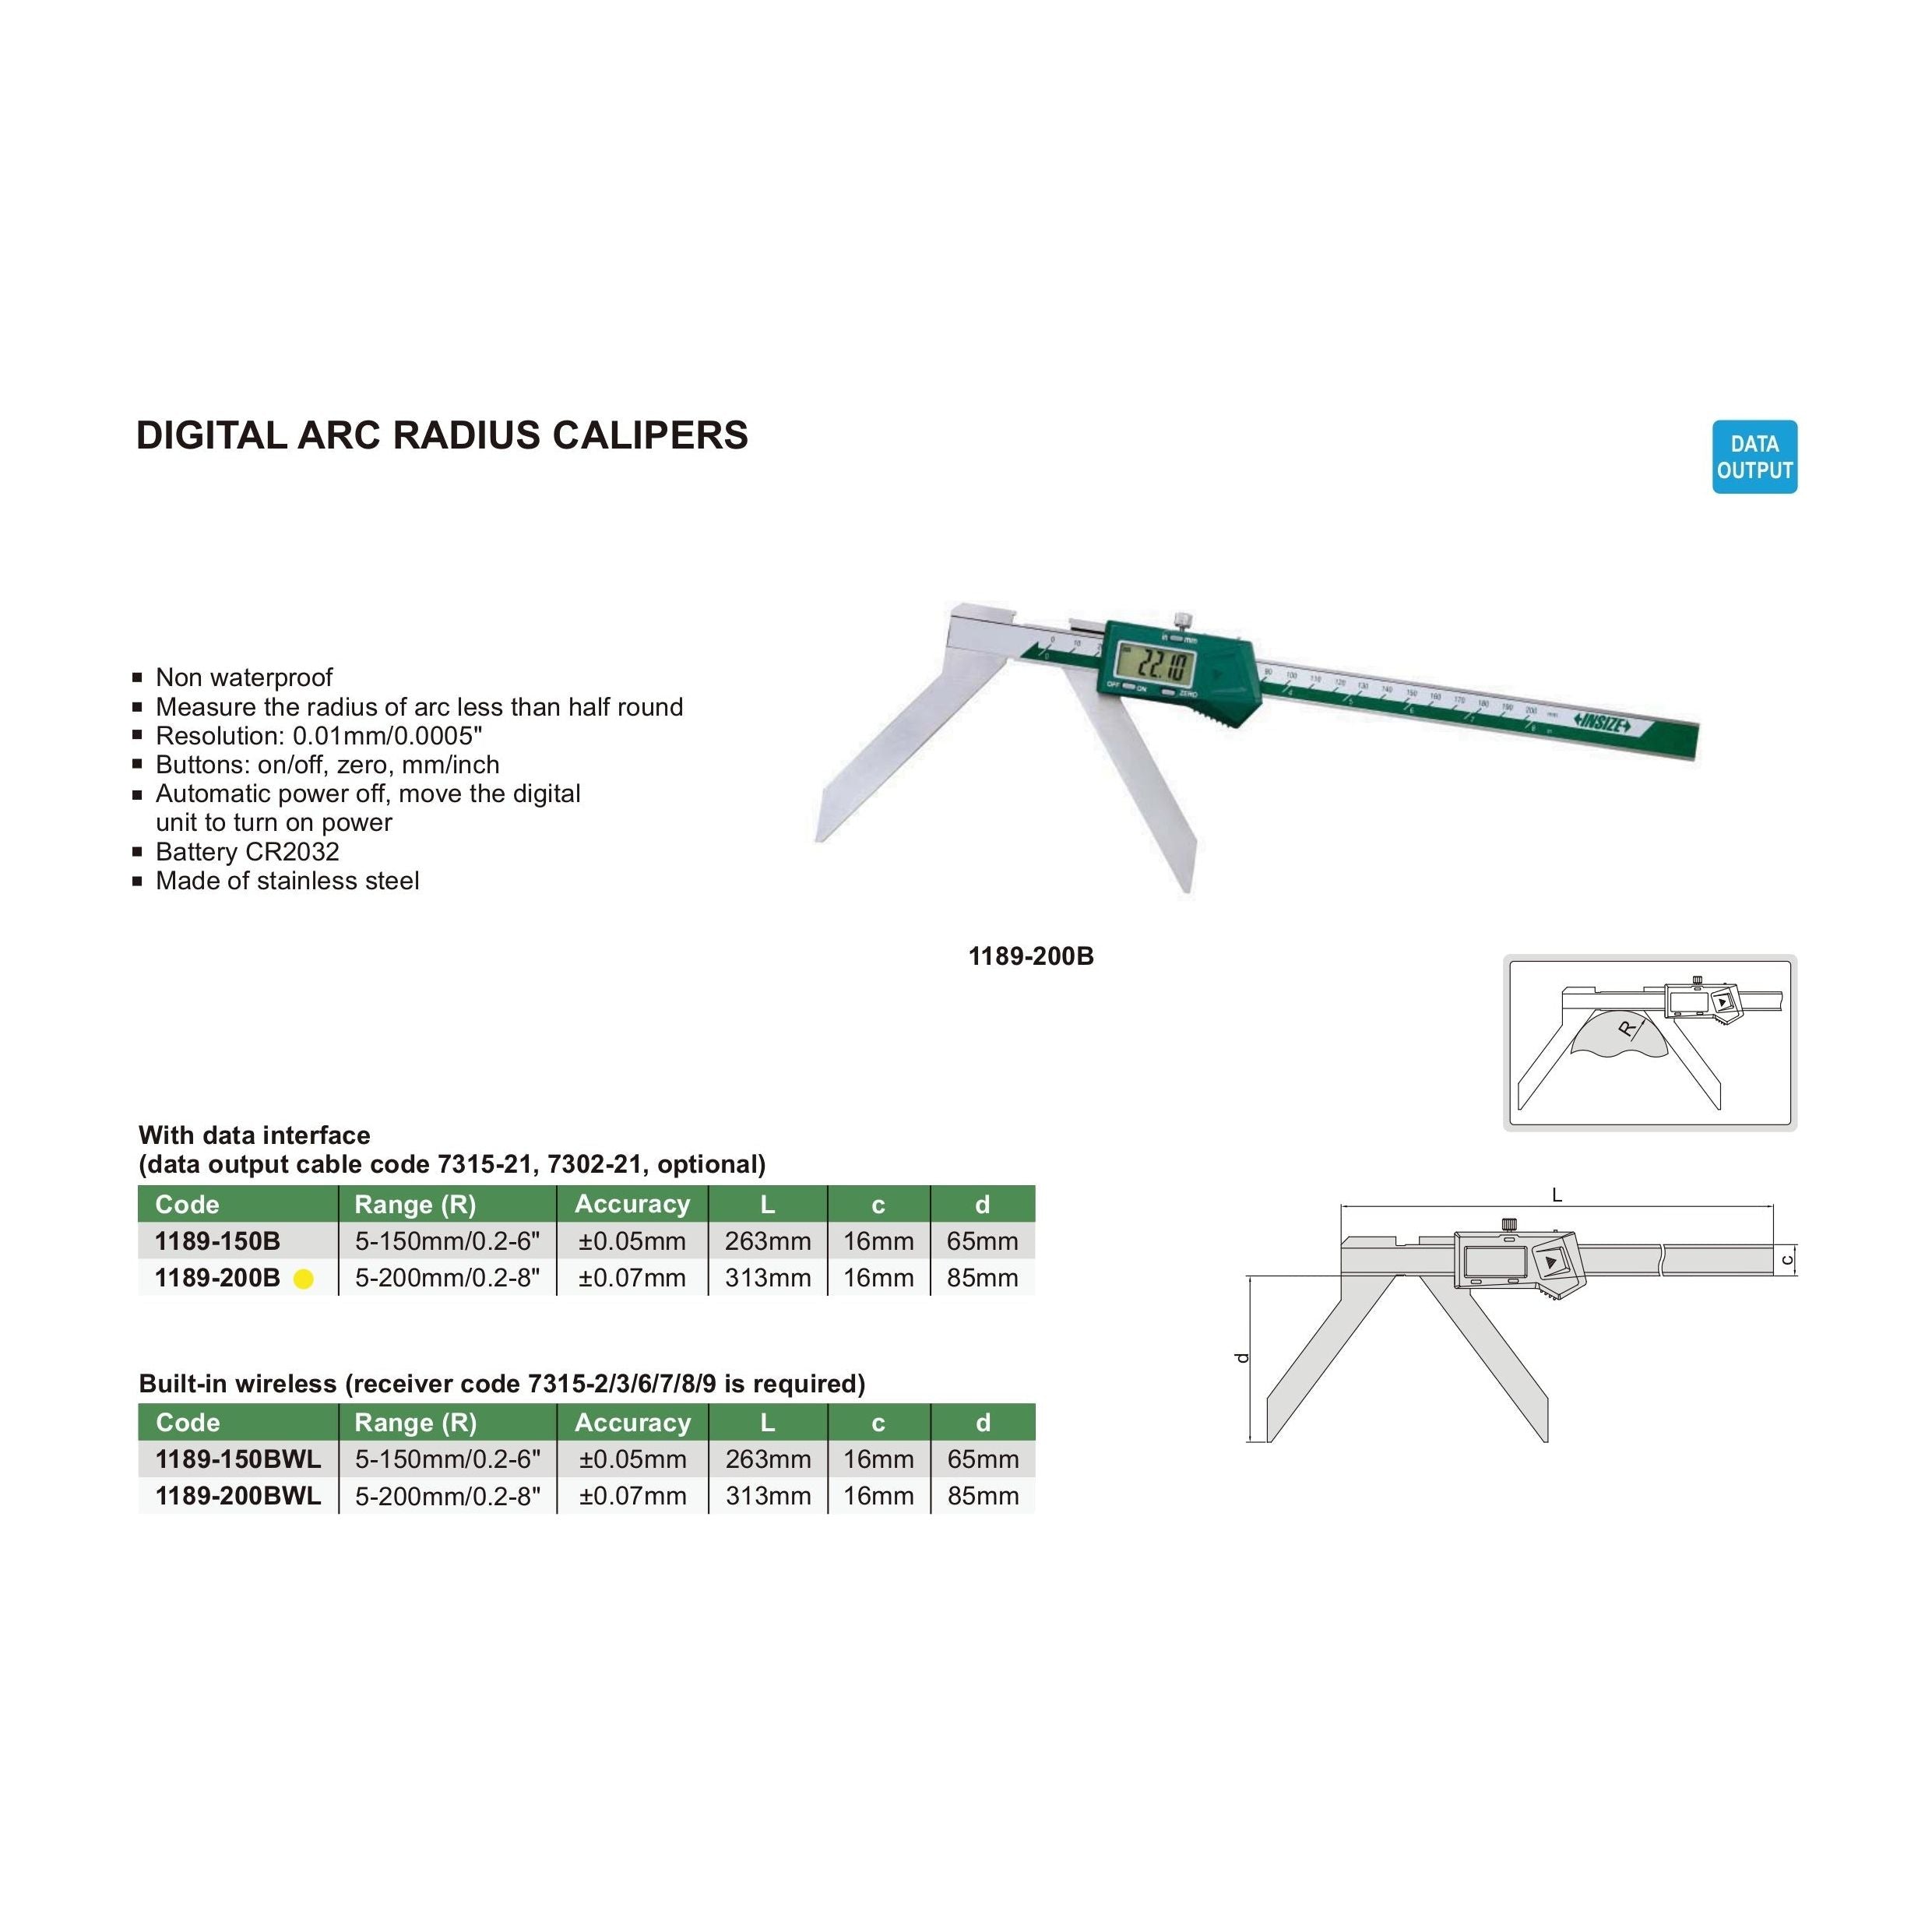 Insize Digital Arc Radius Caliper 5-200mm/0.2-8" Range Series 1189-200B